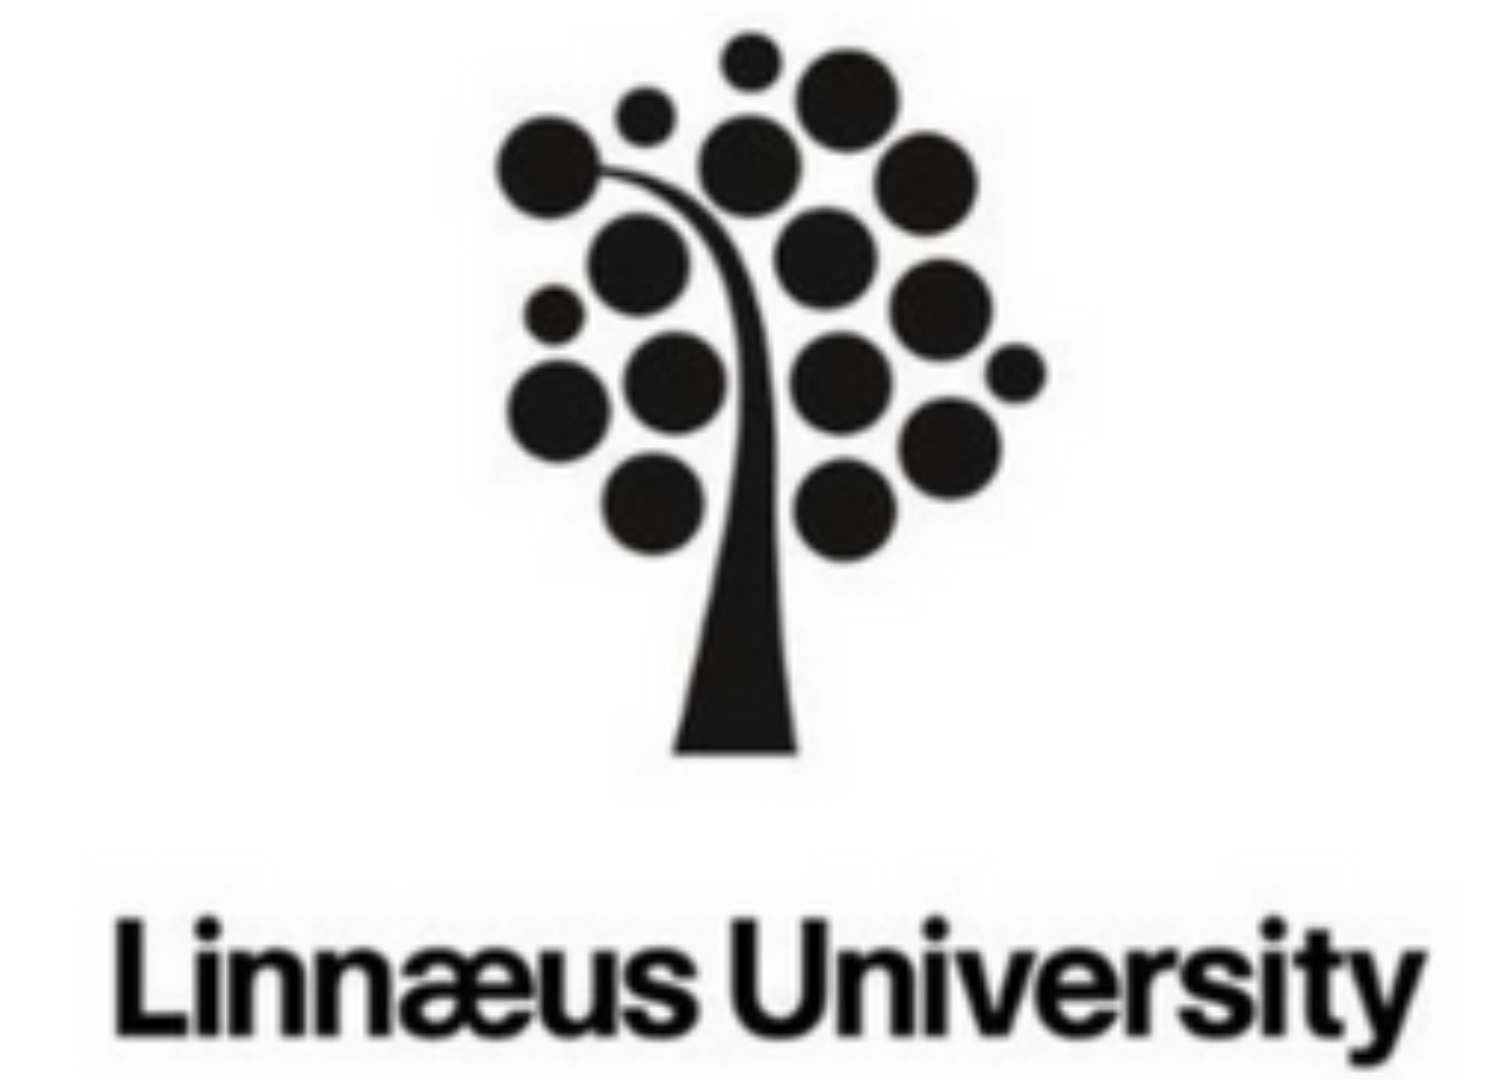 Linnaeus University logo jpg 3